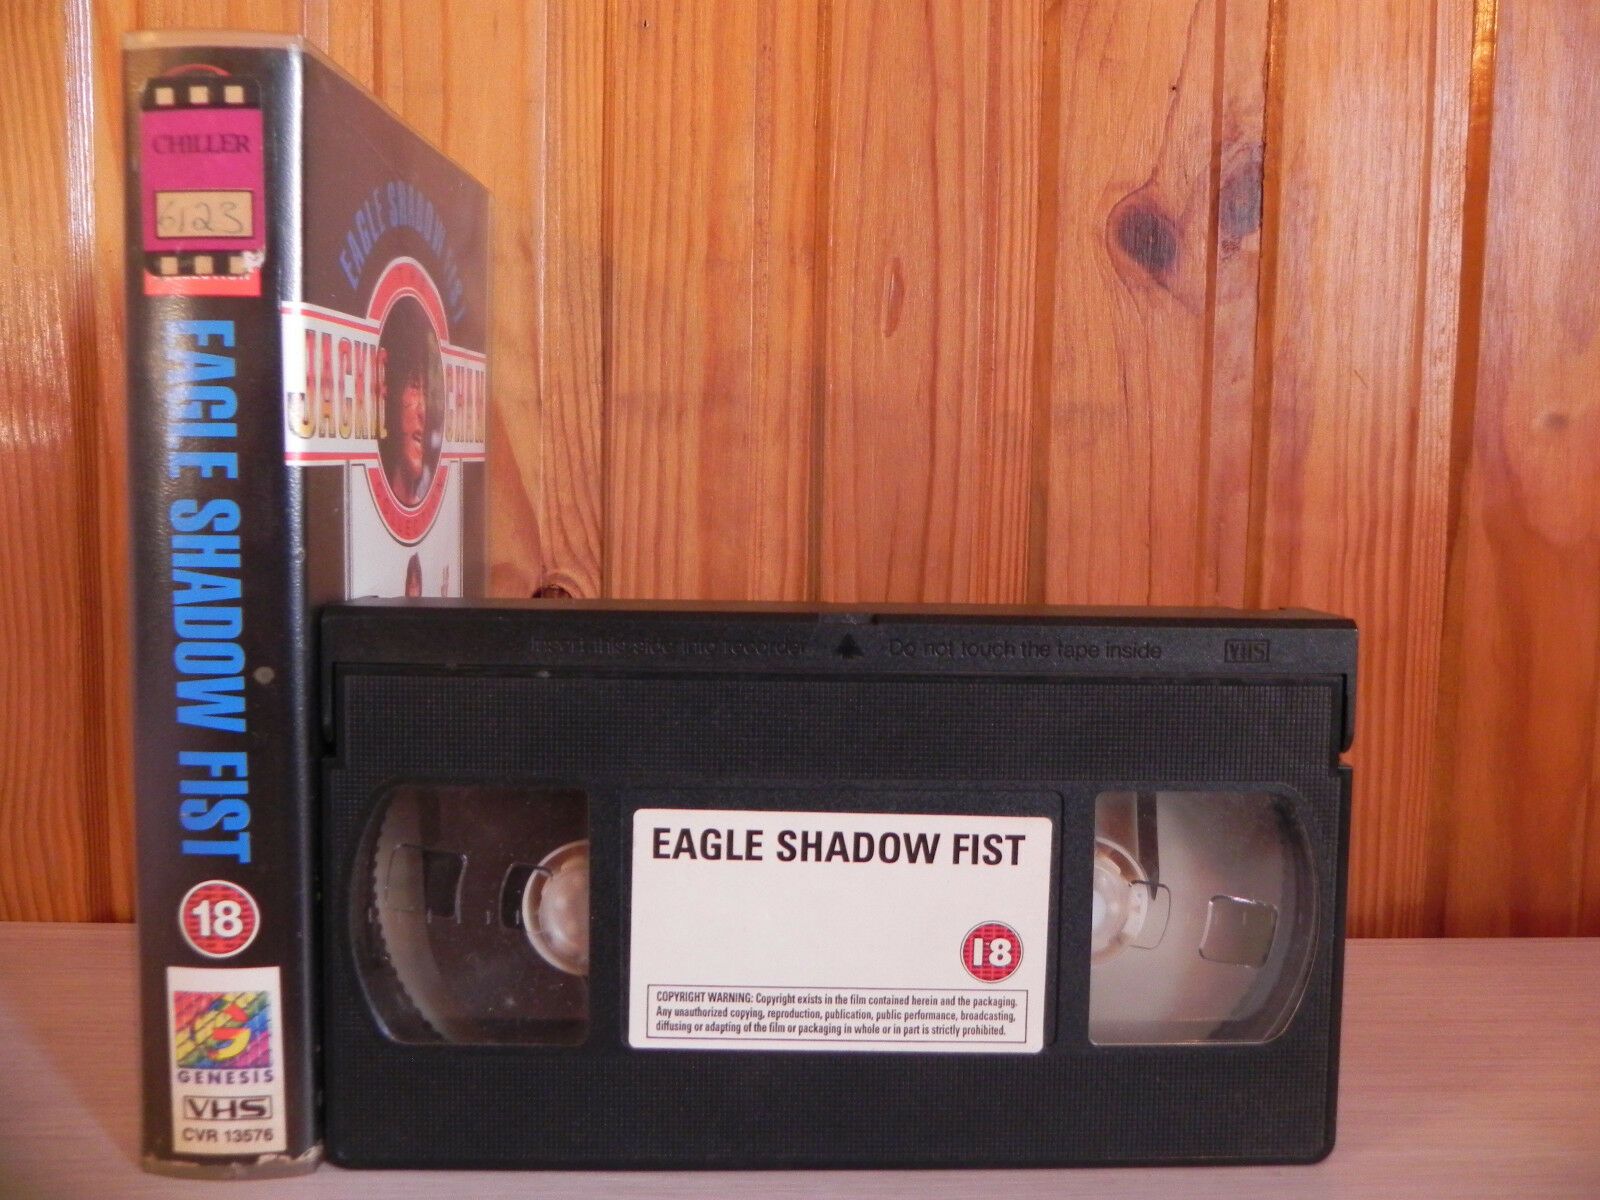 Eagle Shadow Fist - Jackie Chan - Kung-Fu - Genesis - CVR13576 VHS - Pal Video-